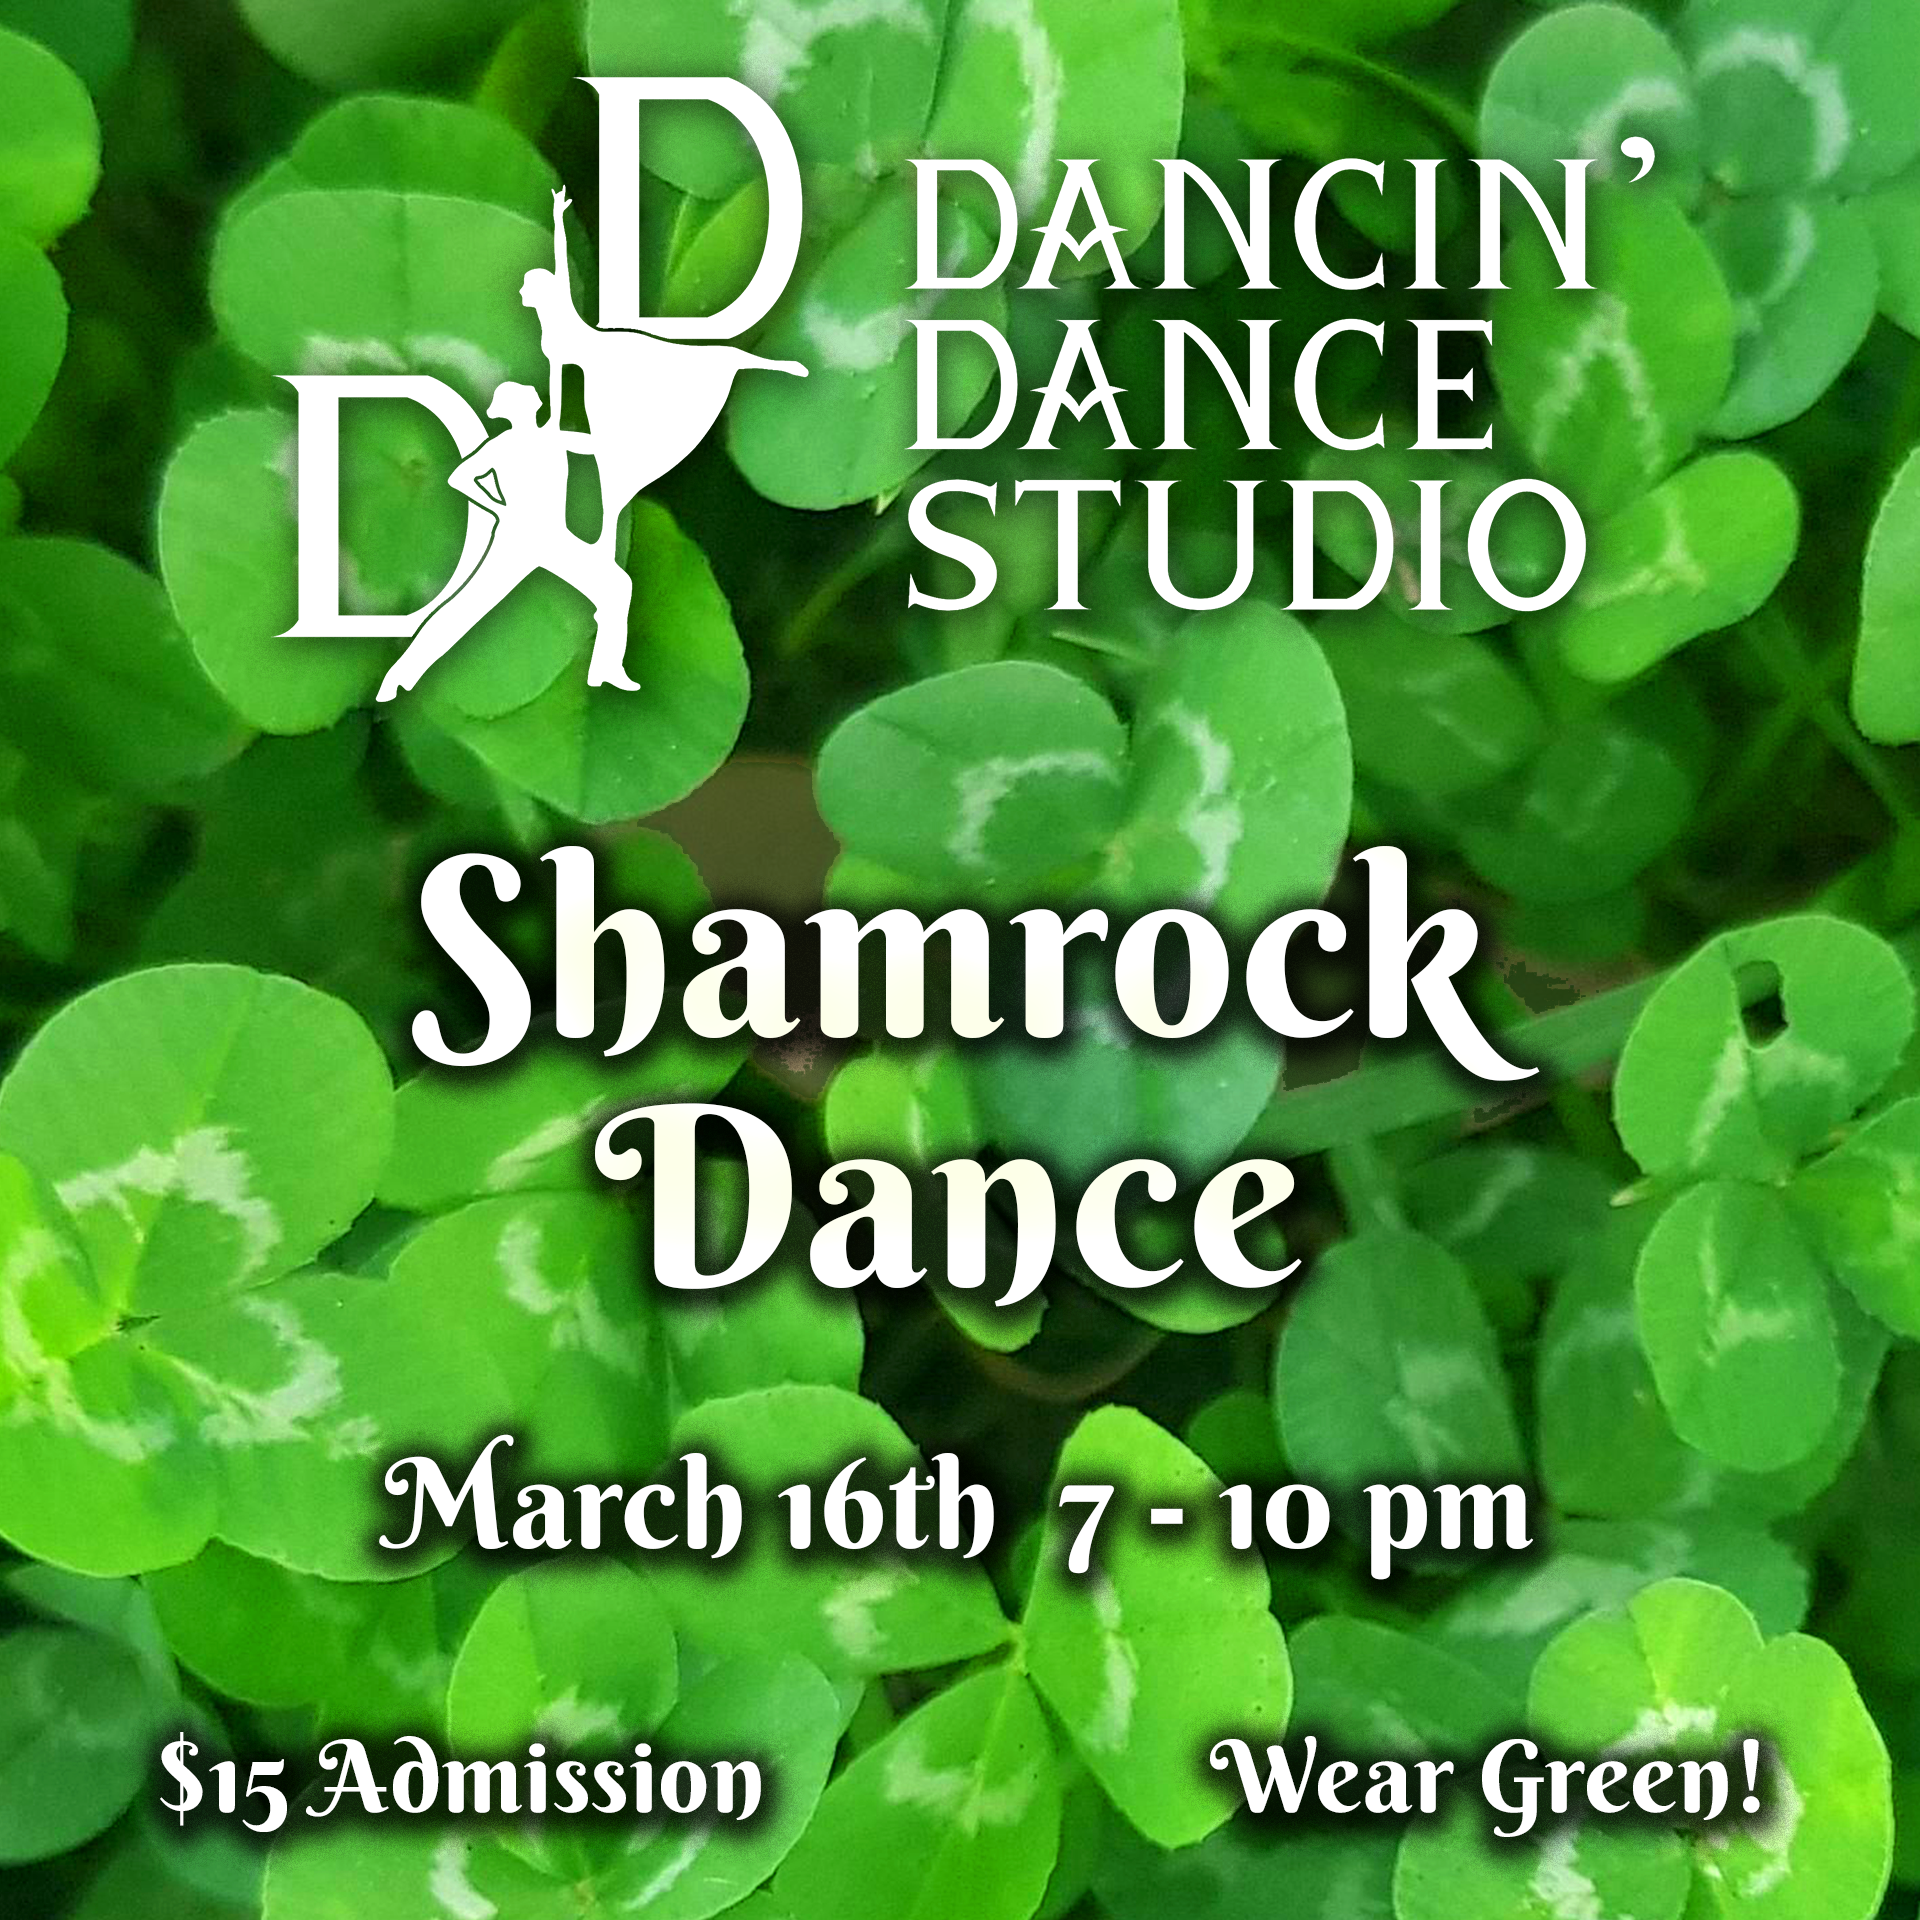 shamrock dance march 16th 7-10pm